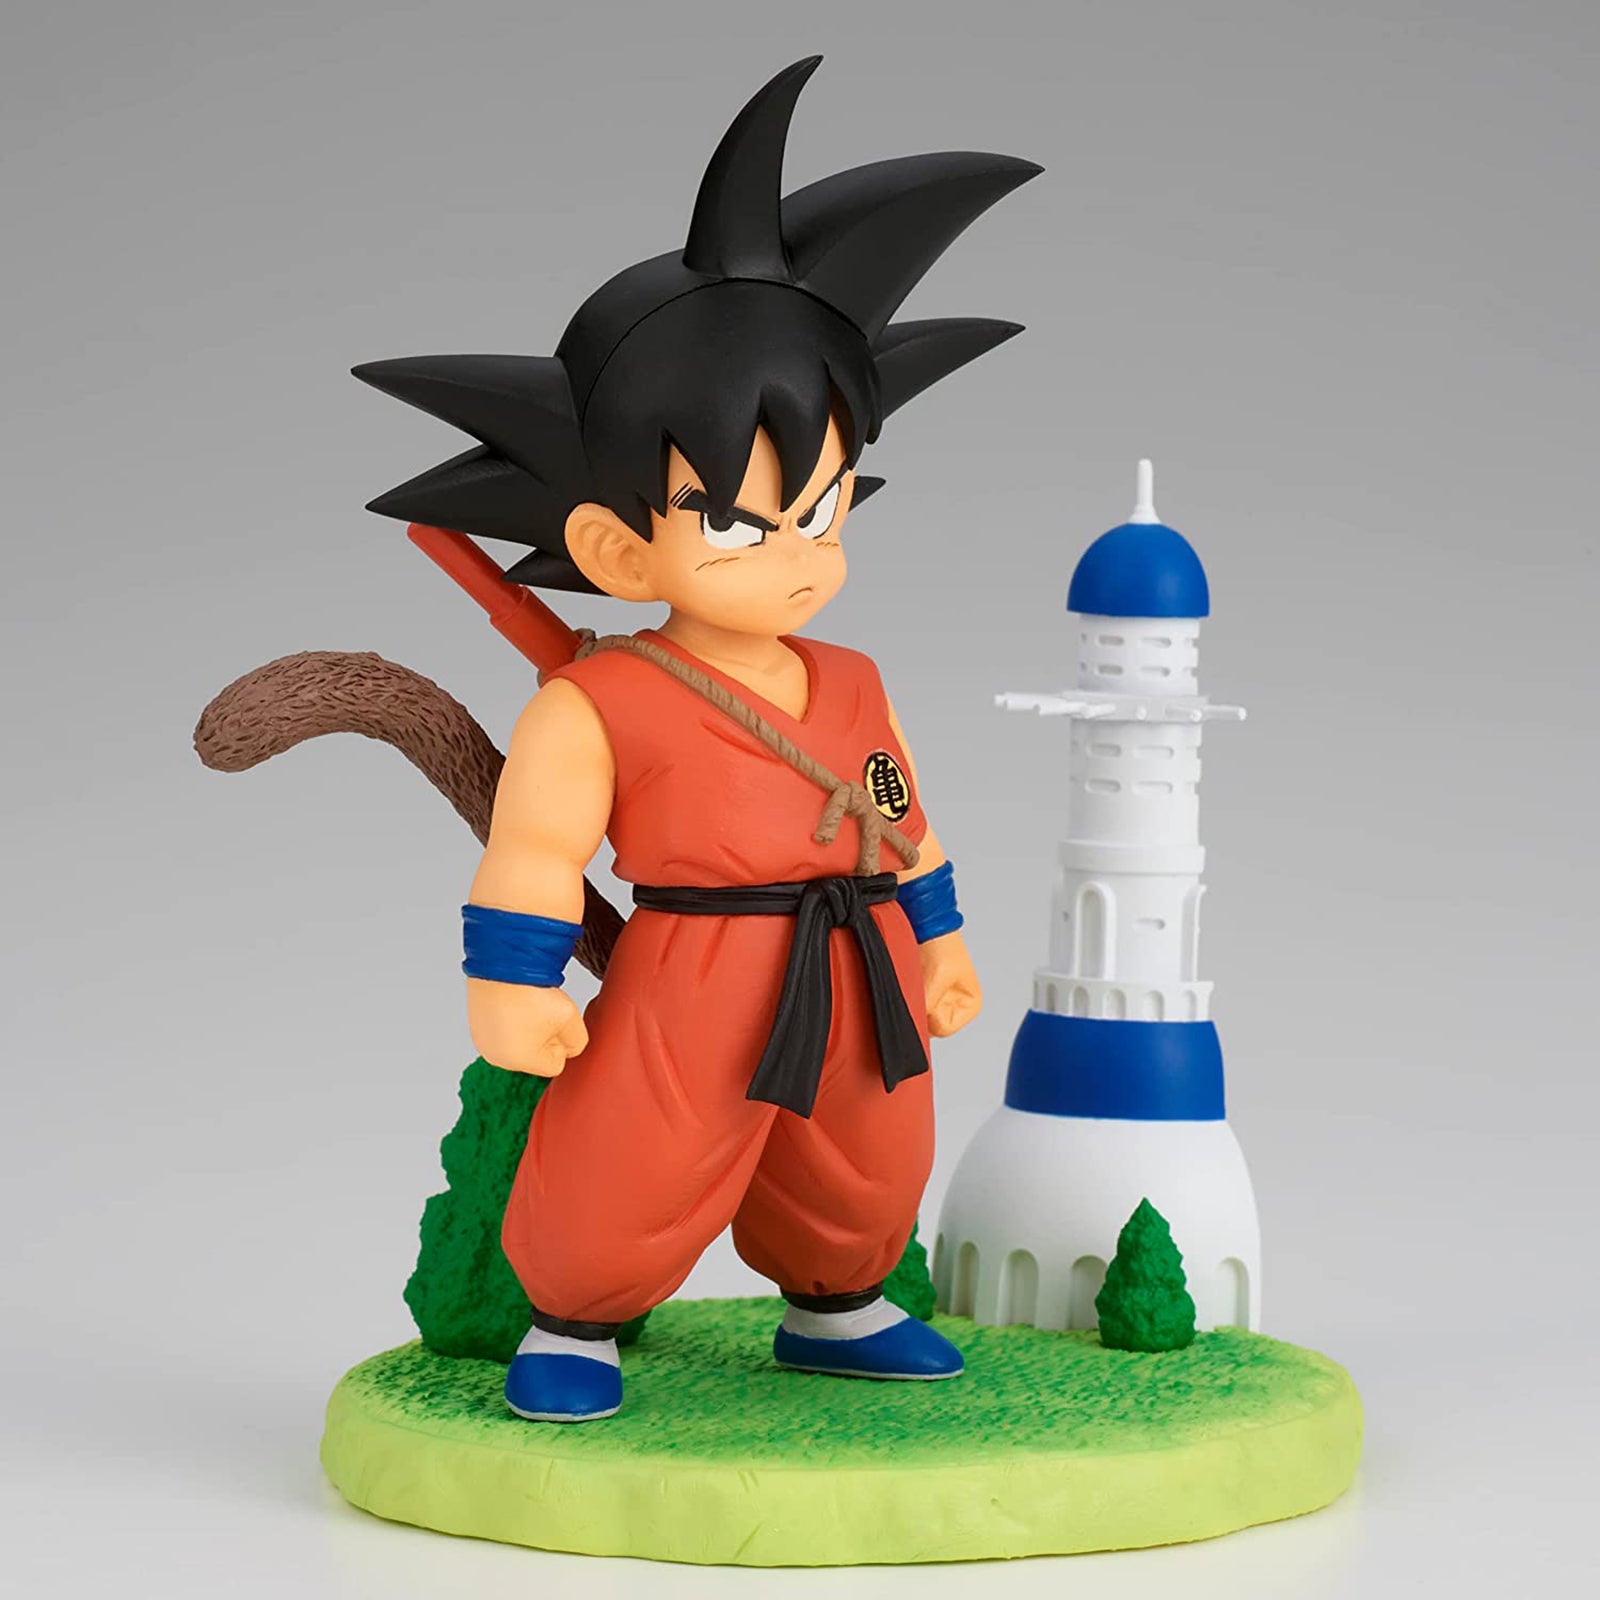 Black Goku Action Figure Toy Model Gift - Dragon Ball Z Merch